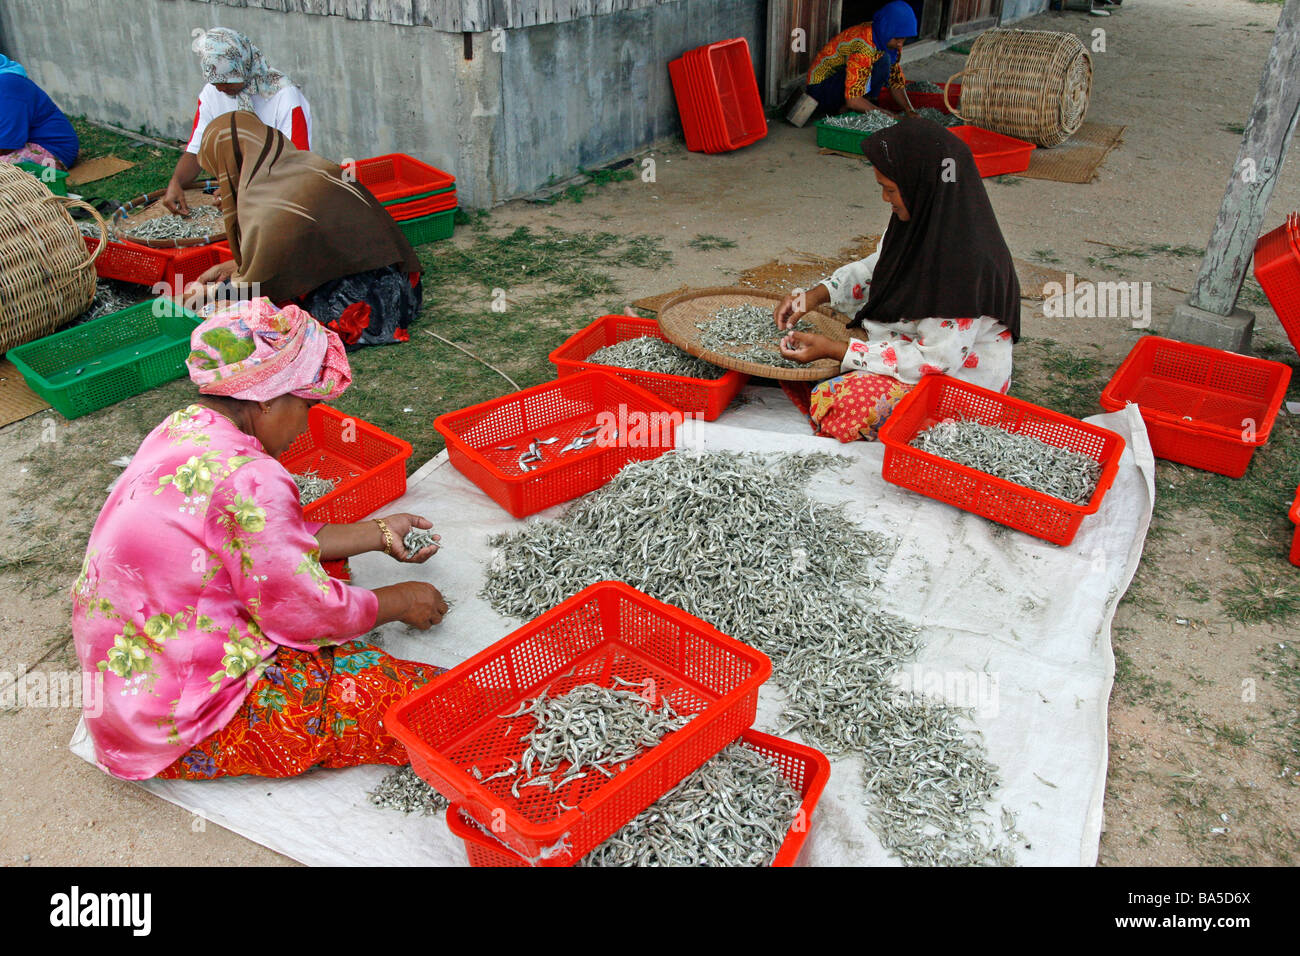 Malay women sort ikan bilis (anchovies) in a fishing village Stock Photo